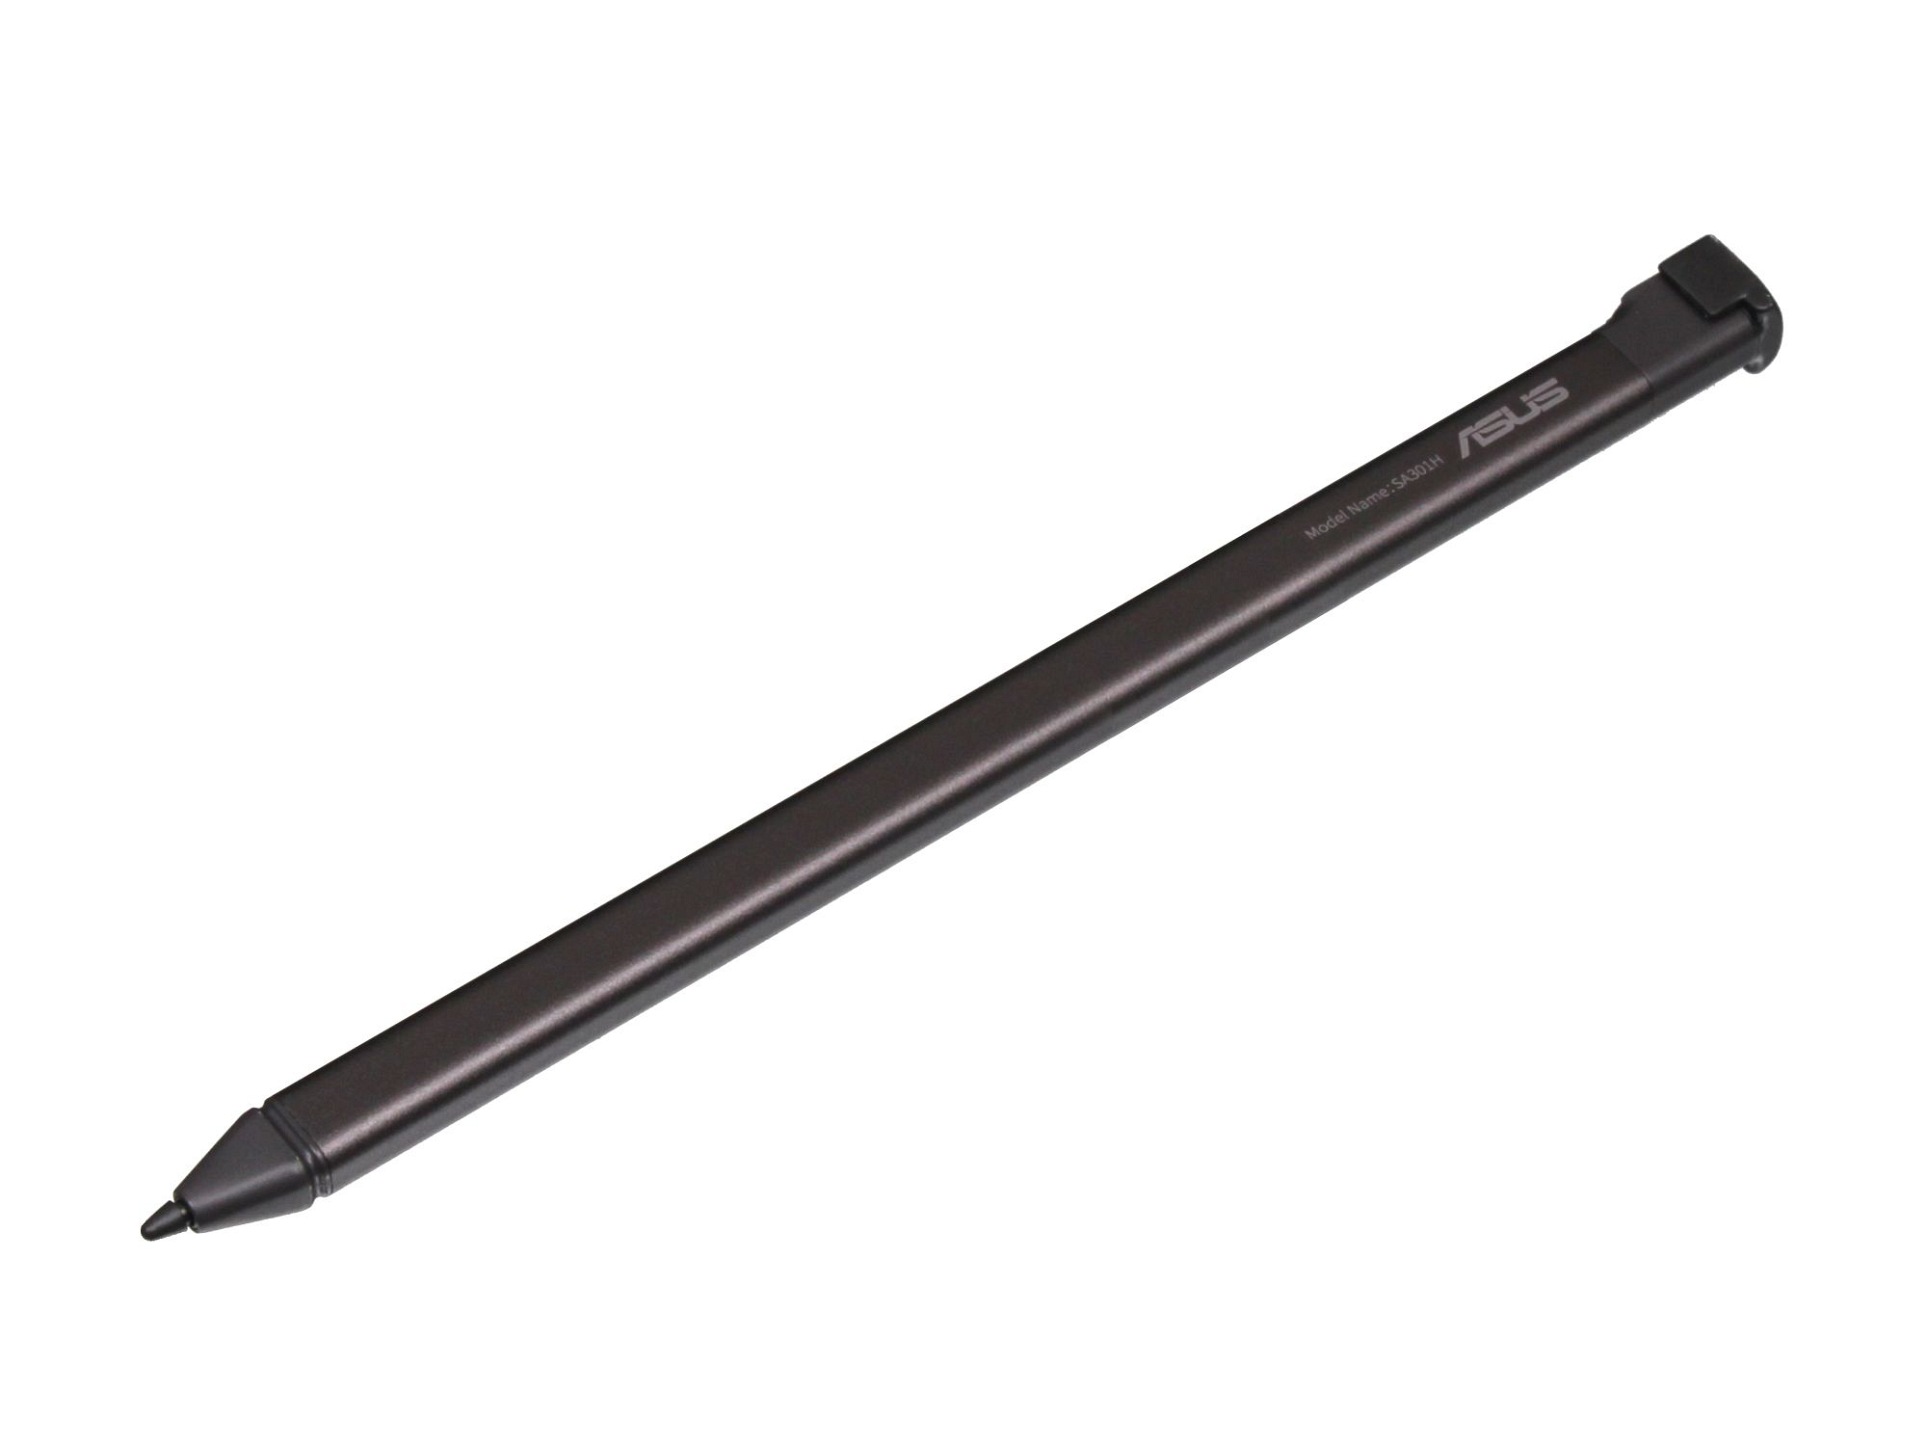 Asus 90NX03U0-R90010 Stylus Pen